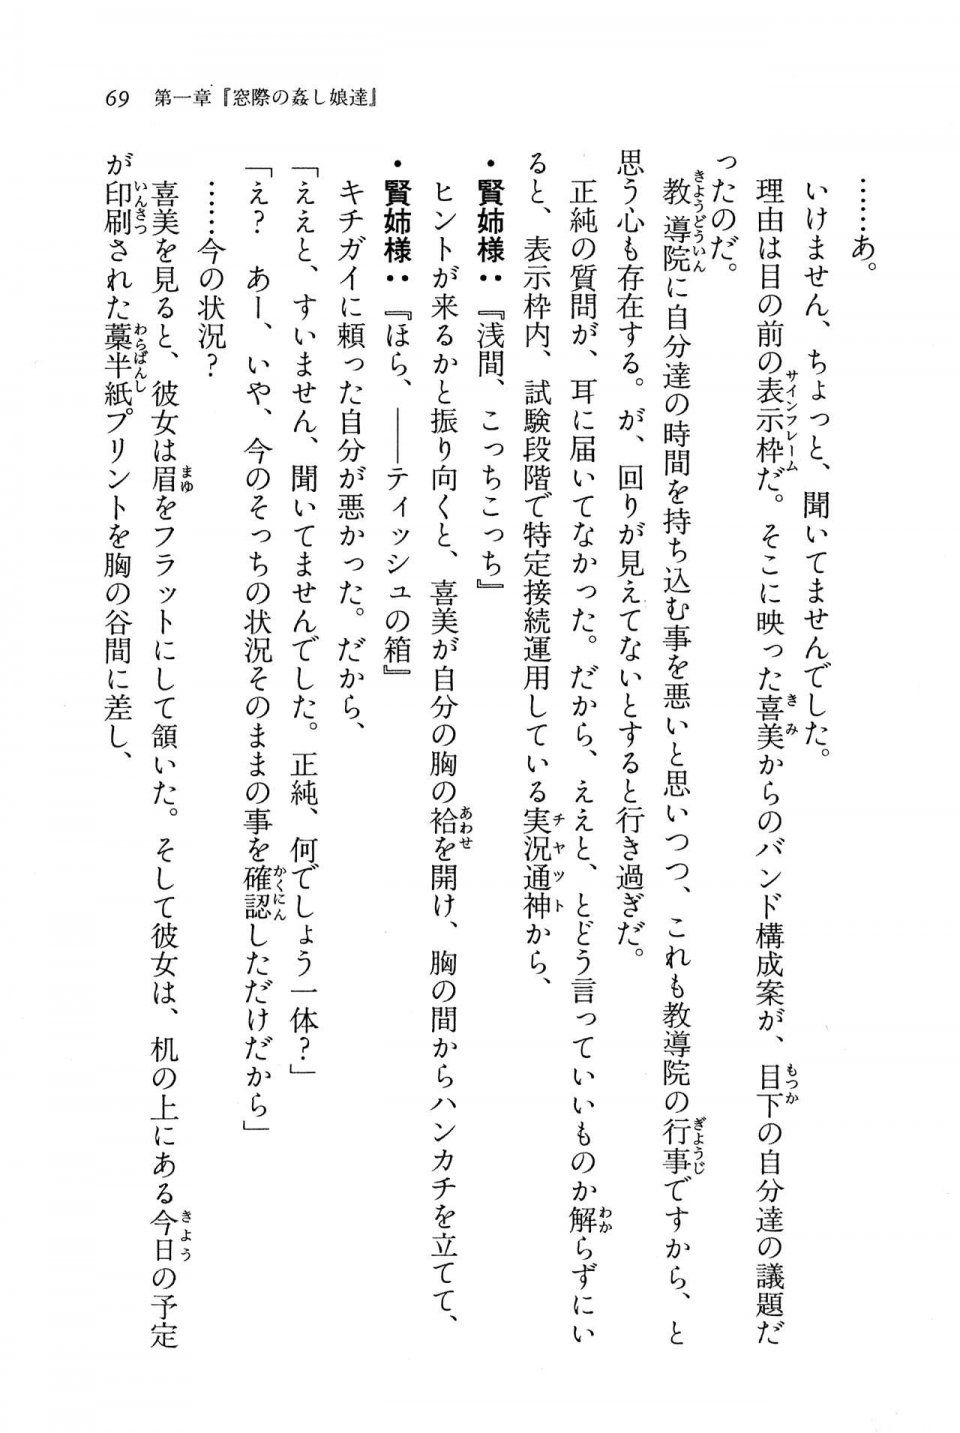 Kyoukai Senjou no Horizon BD Special Mininovel Vol 5(3A) - Photo #73